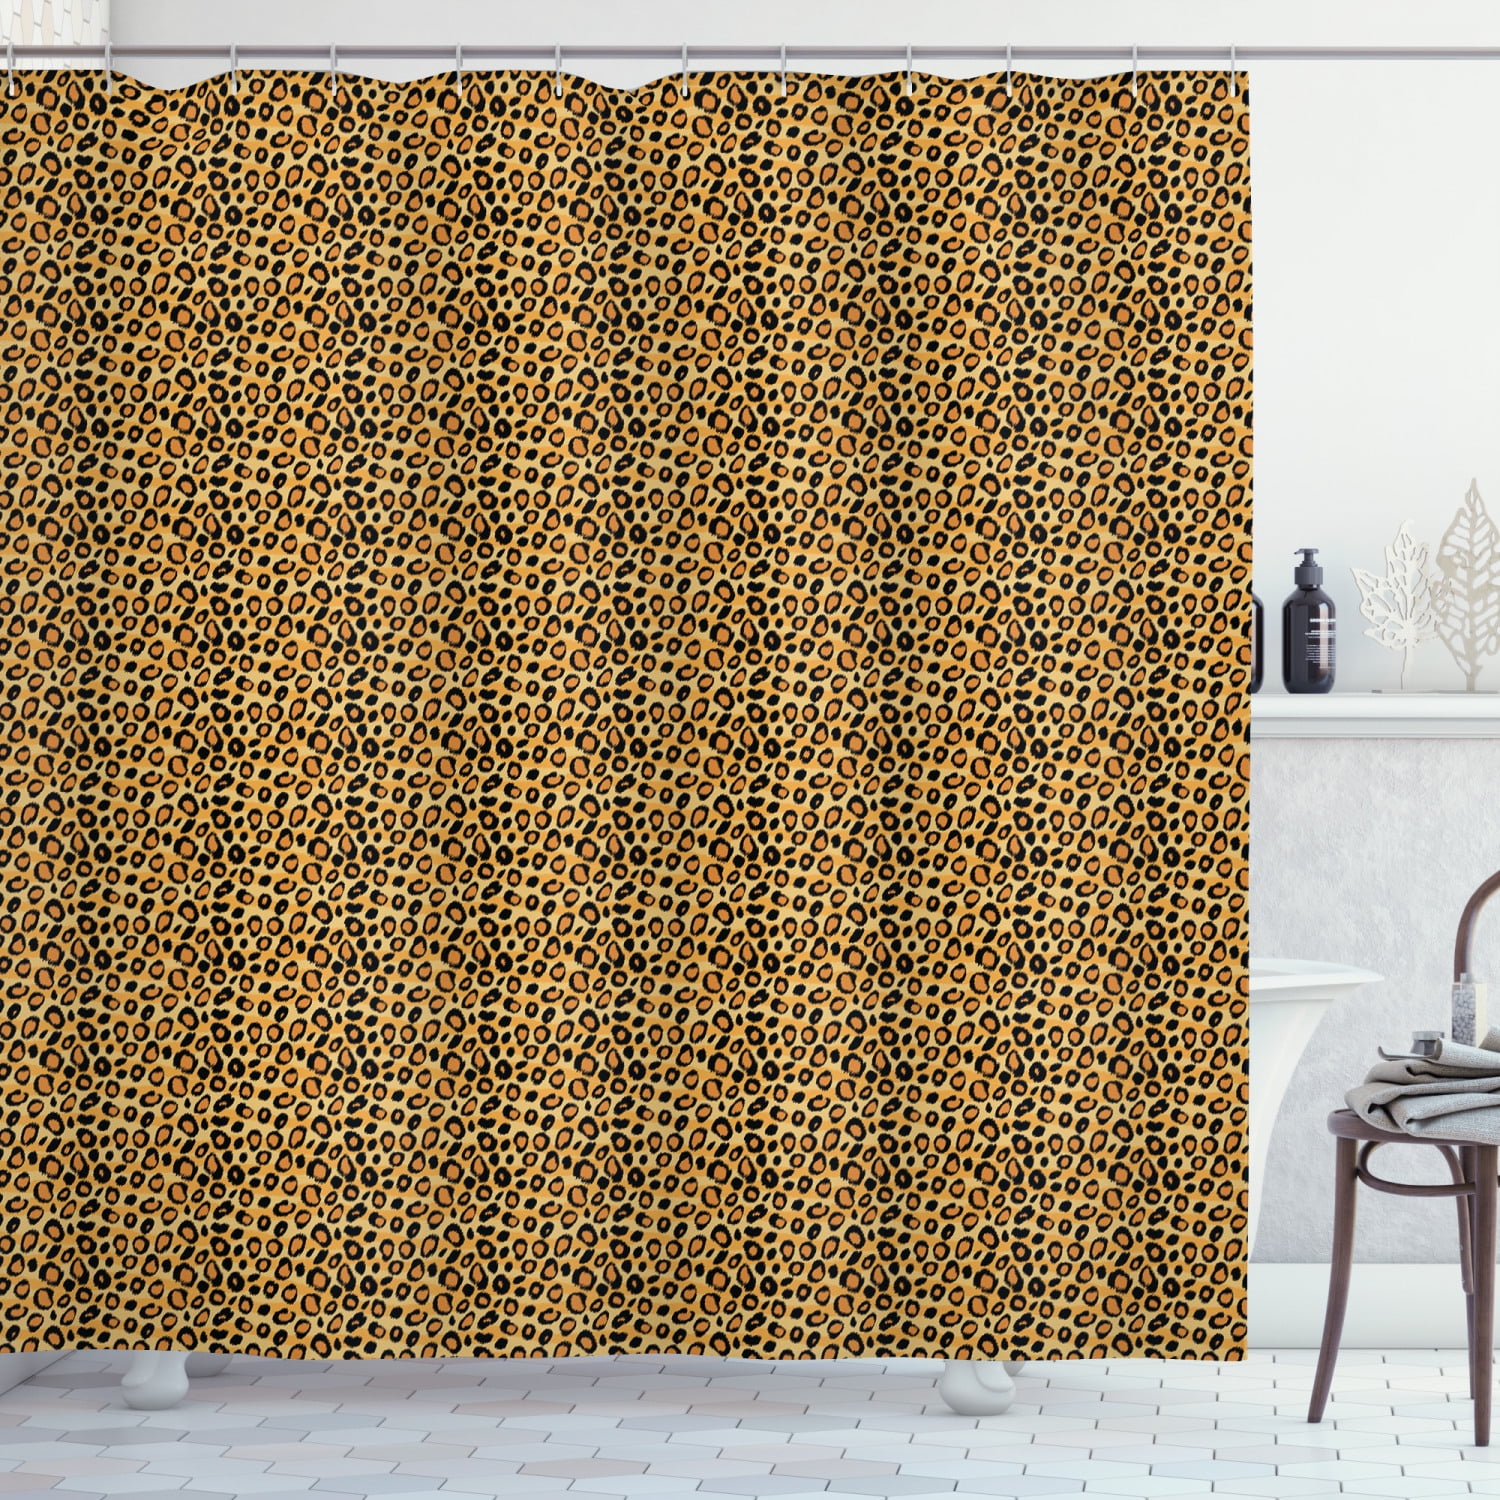 Leopard Print Shower Curtain Spotty, Jungle Print Shower Curtain